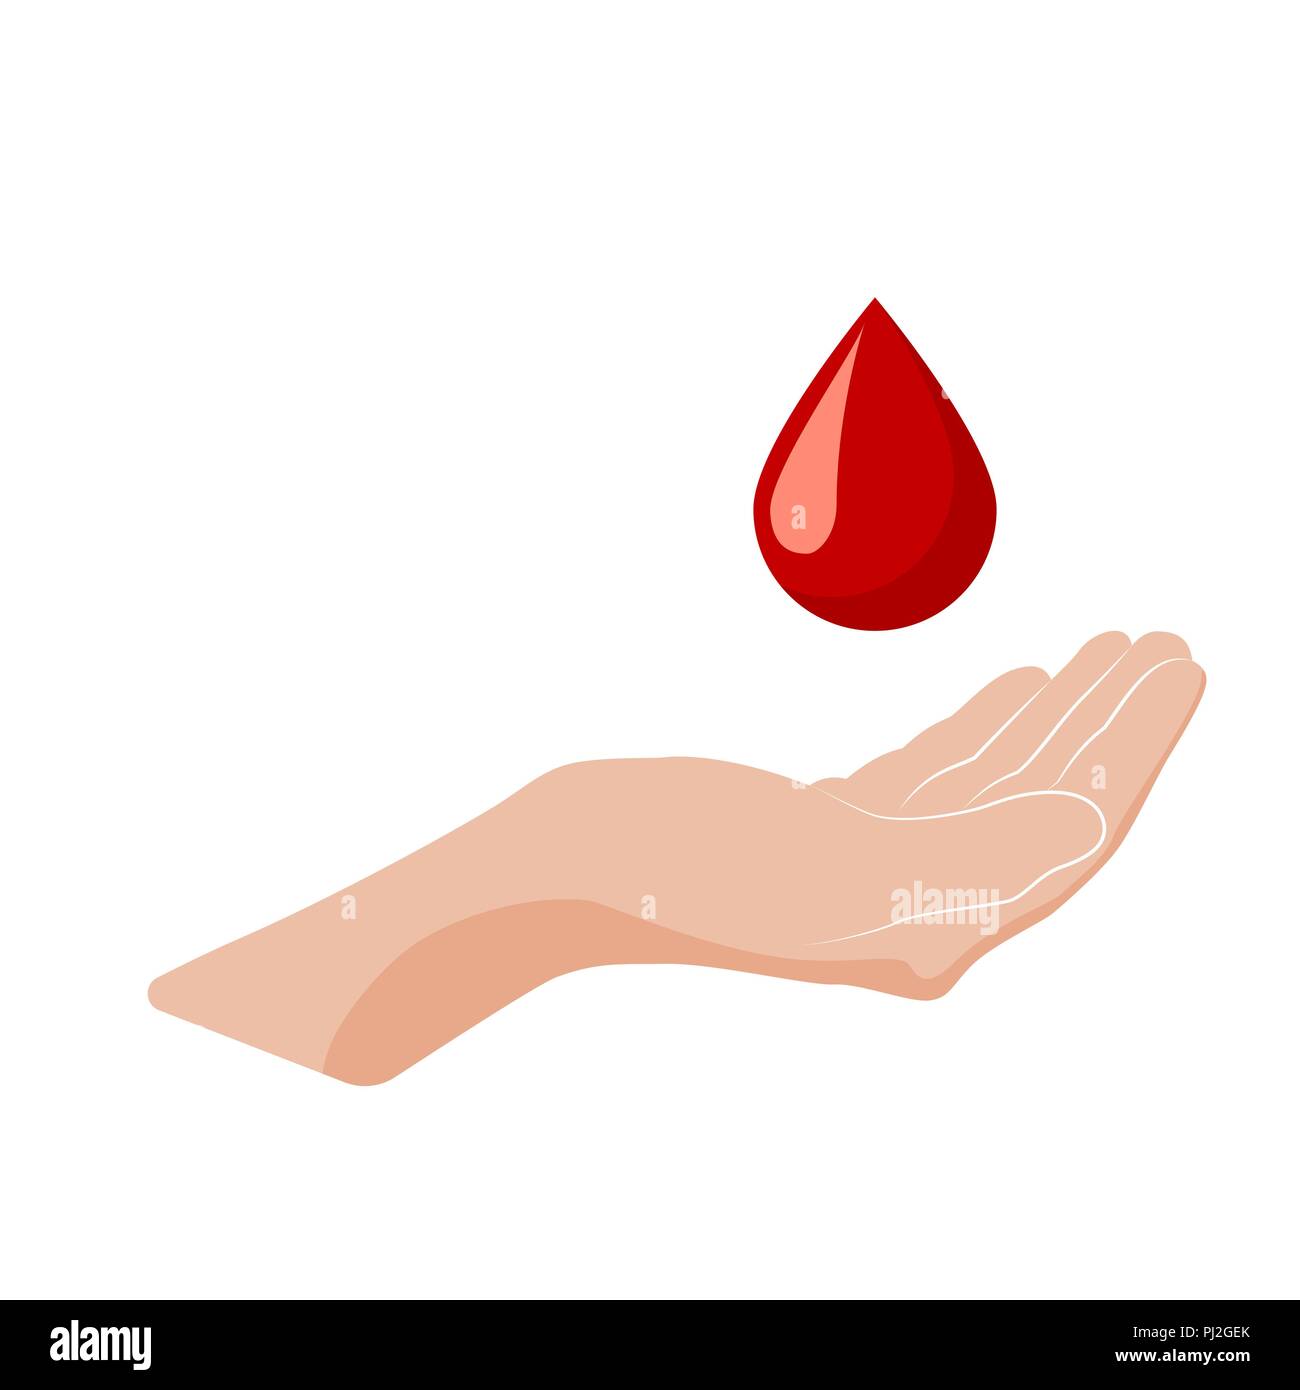 Hand Blut spenden. Weltblutspendetag Konzept. Red drop Symbol der freiwilligen Blutspende. Vektor Cartoon Illustration isoliert auf weißem backgroun Stock Vektor